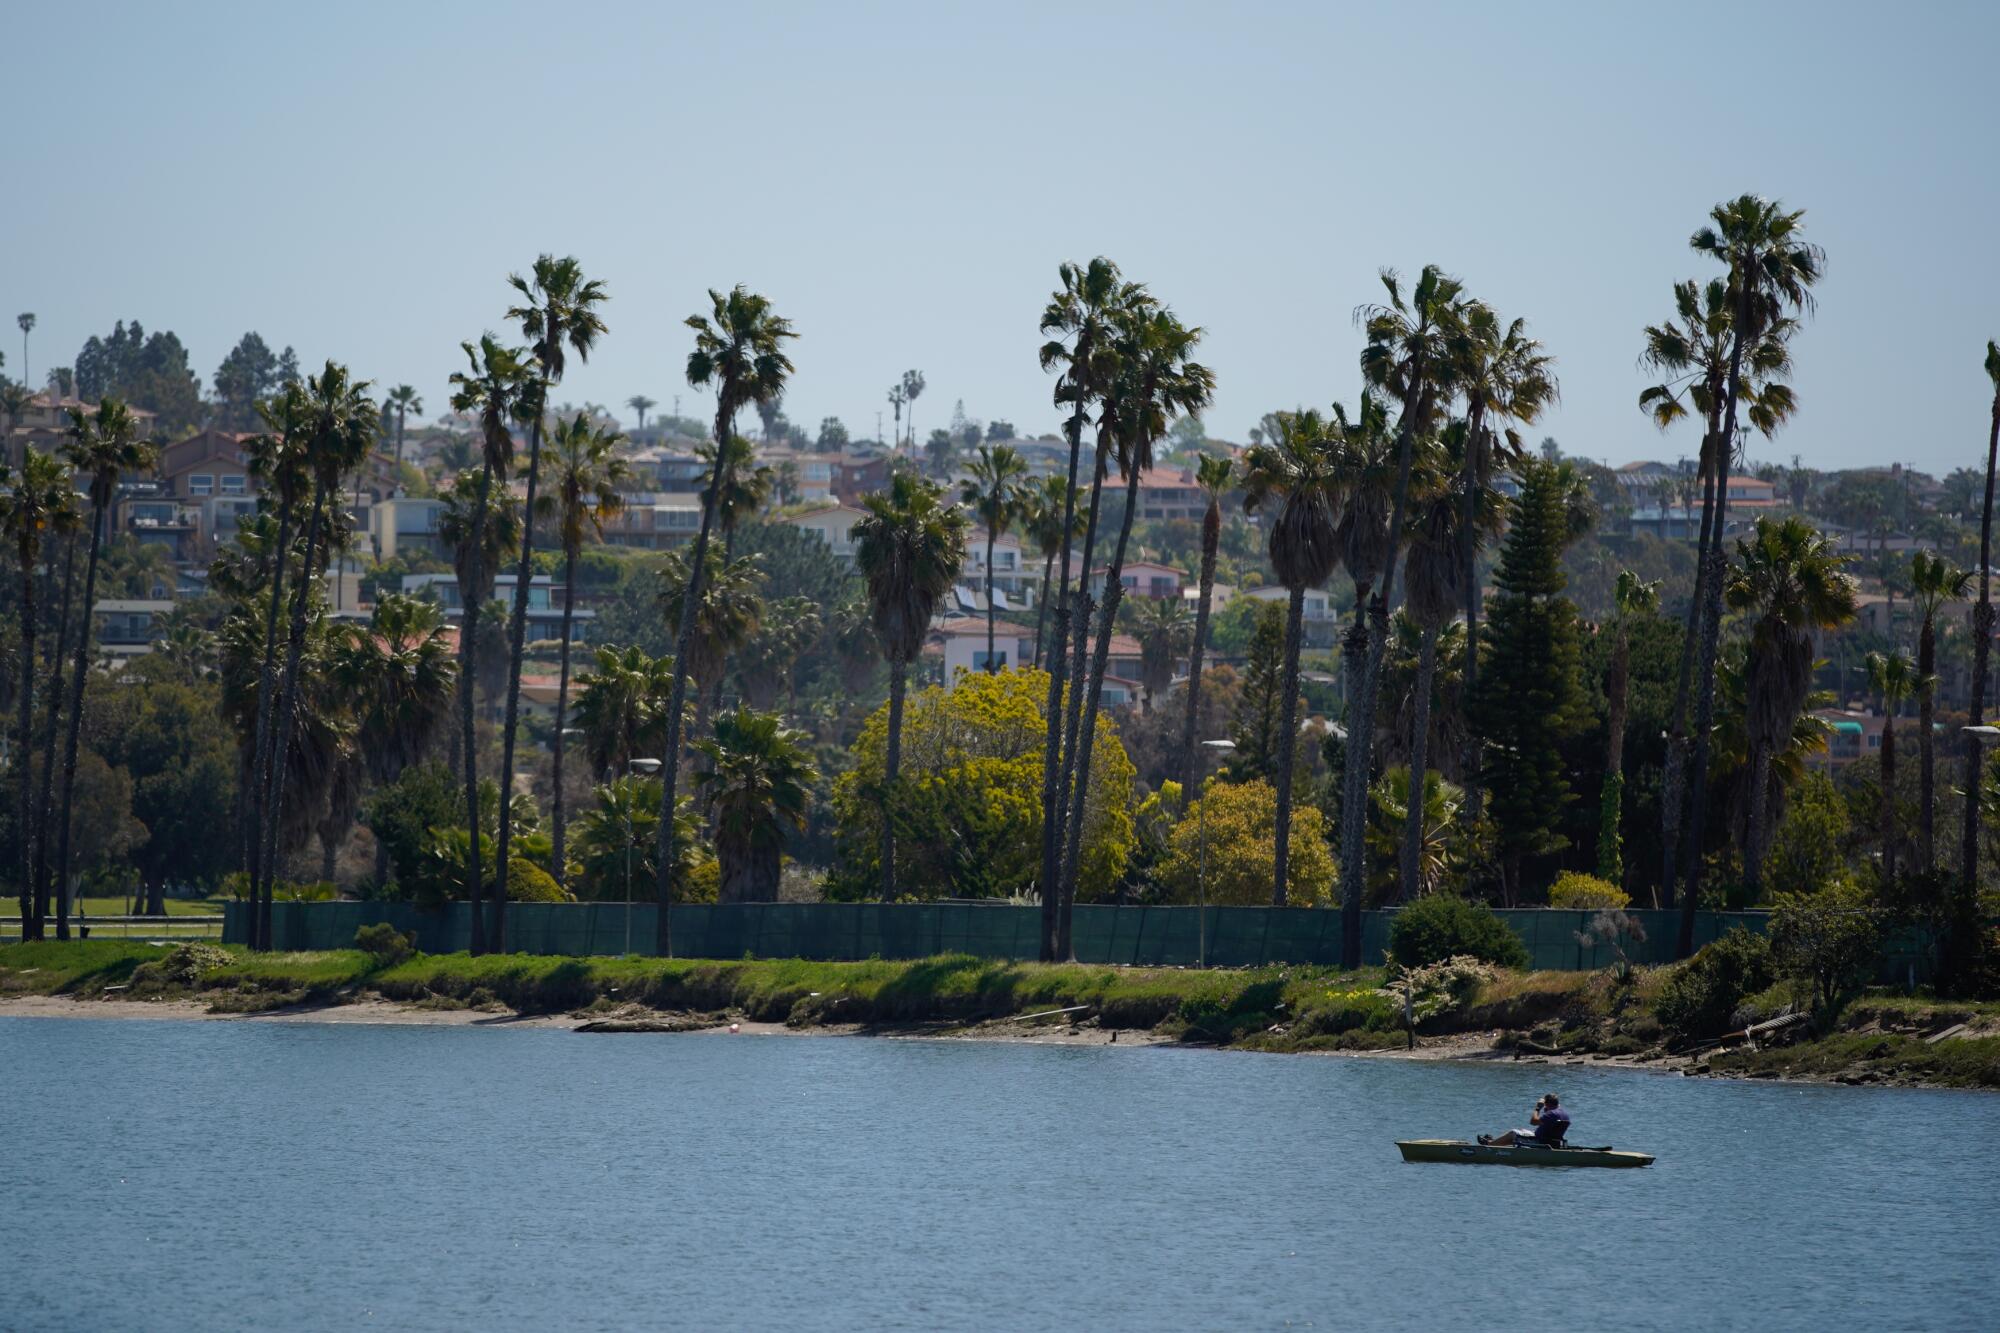 A person kayaks on a sunny bay alongside a palm-lined shore.